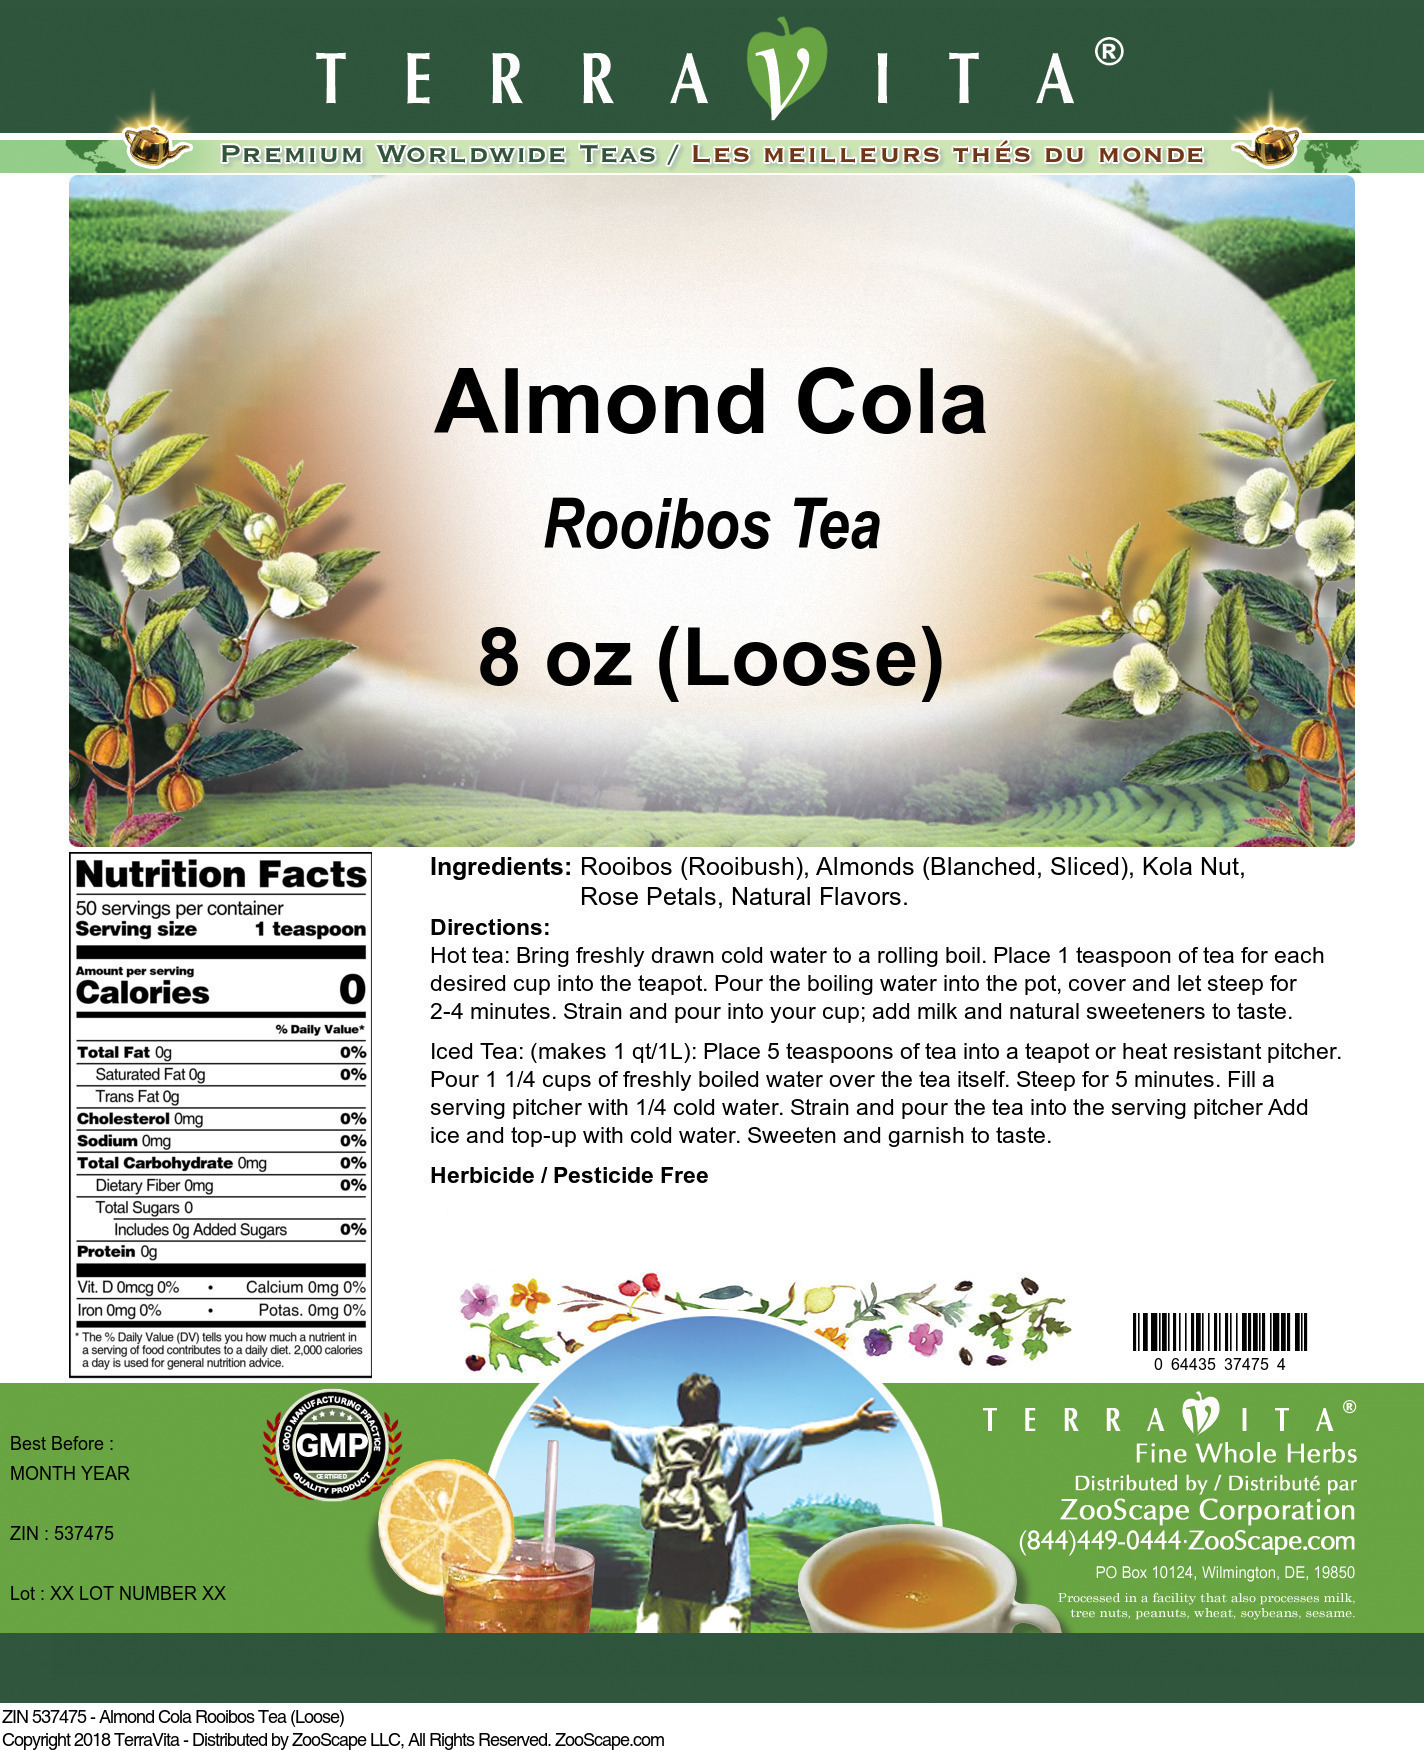 Almond Cola Rooibos Tea (Loose) - Label